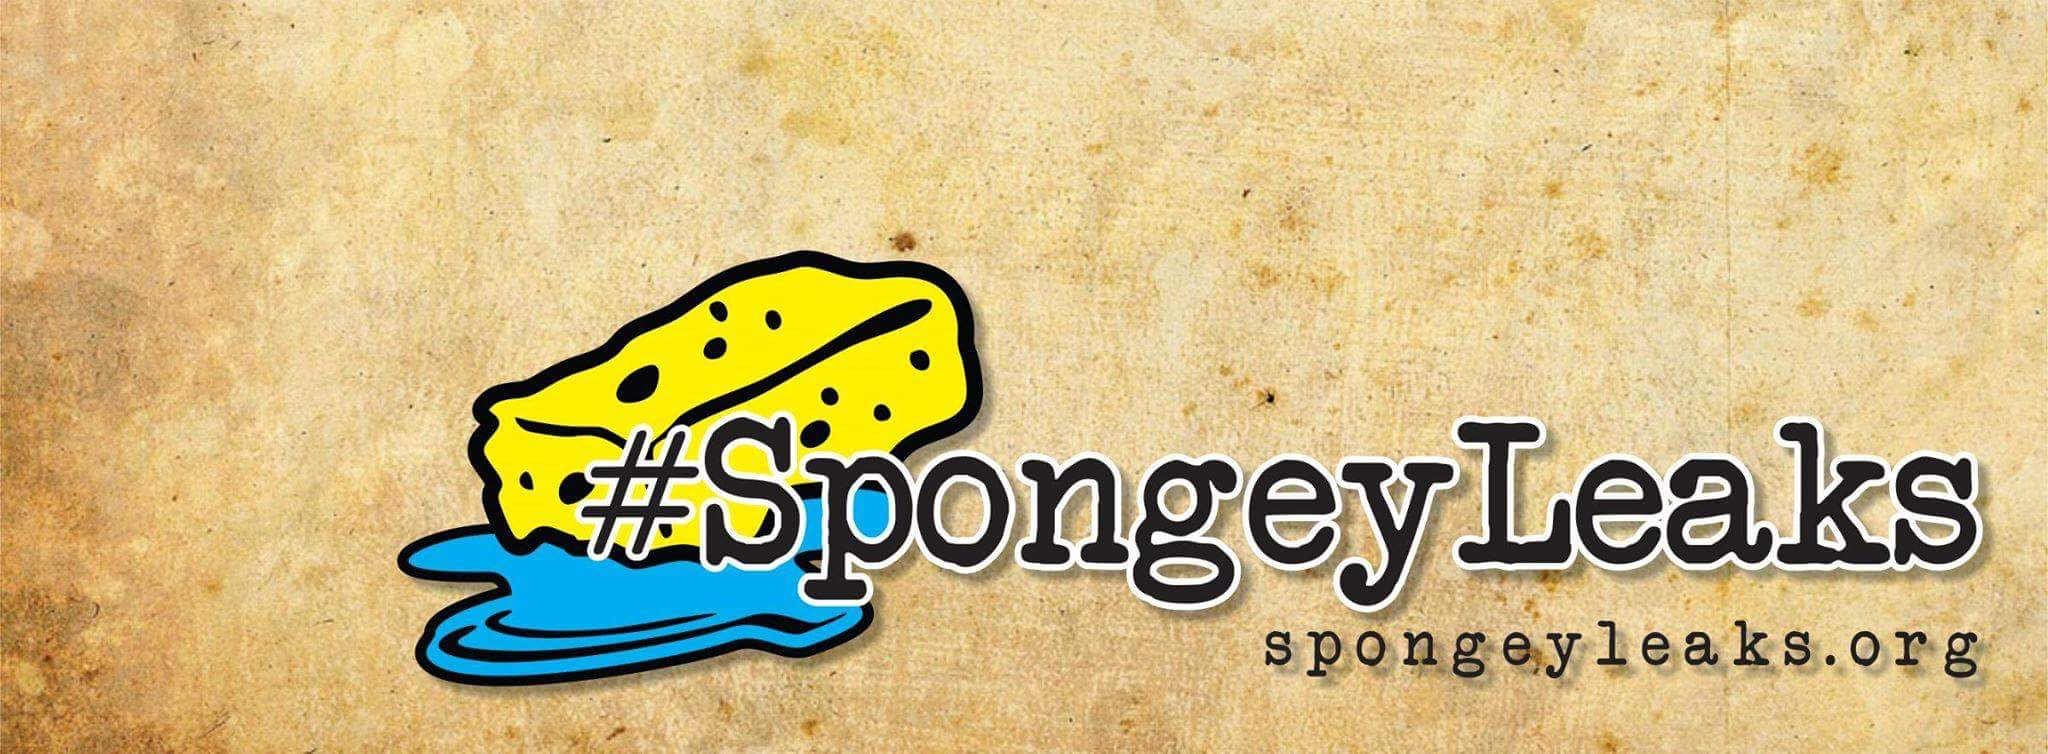 Company Logo 1 For #SpongeyLeaks'